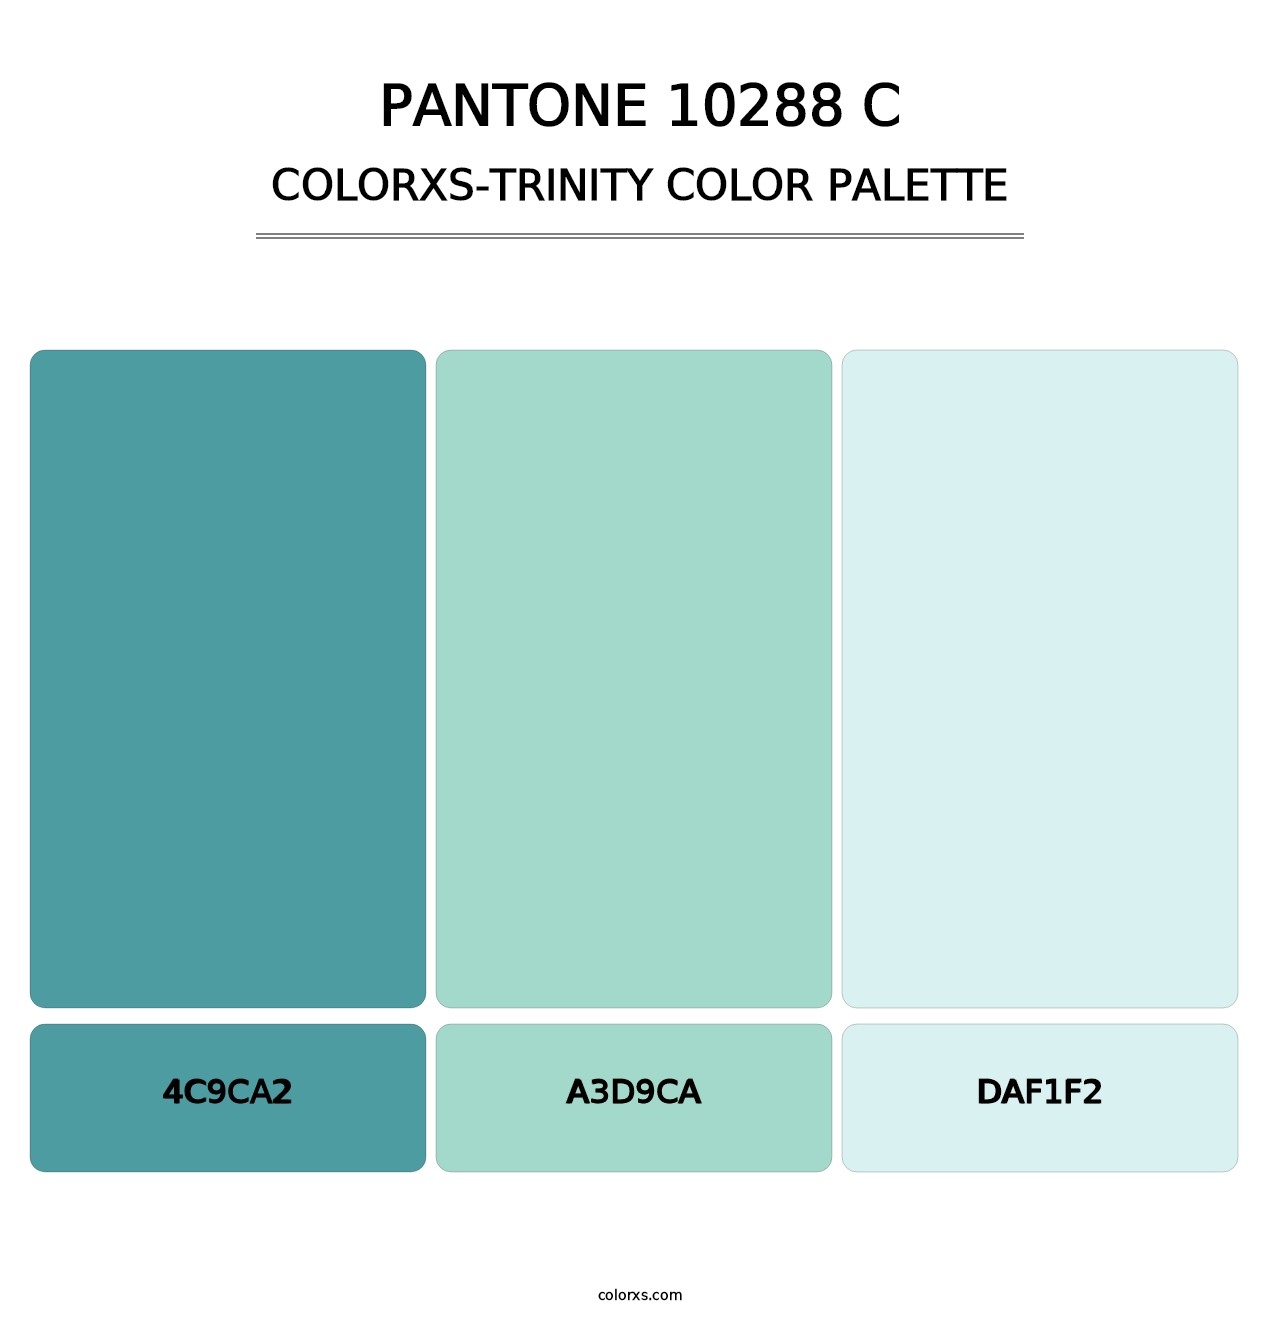 PANTONE 10288 C - Colorxs Trinity Palette